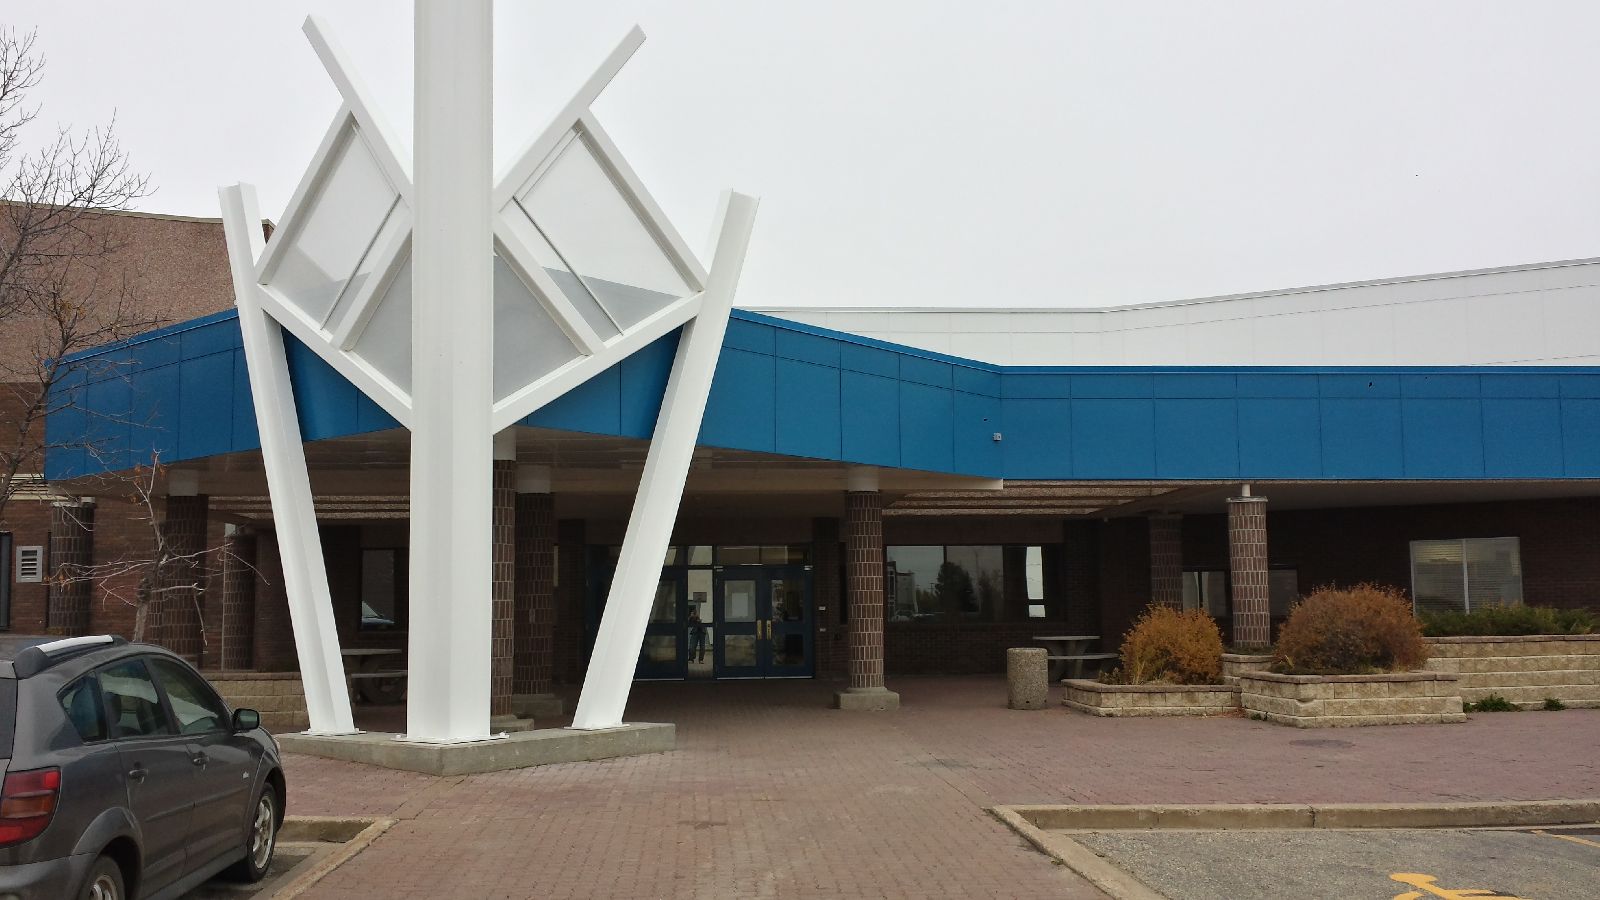 PWA highest ranked high school in Grande Prairie: Fraser Institute